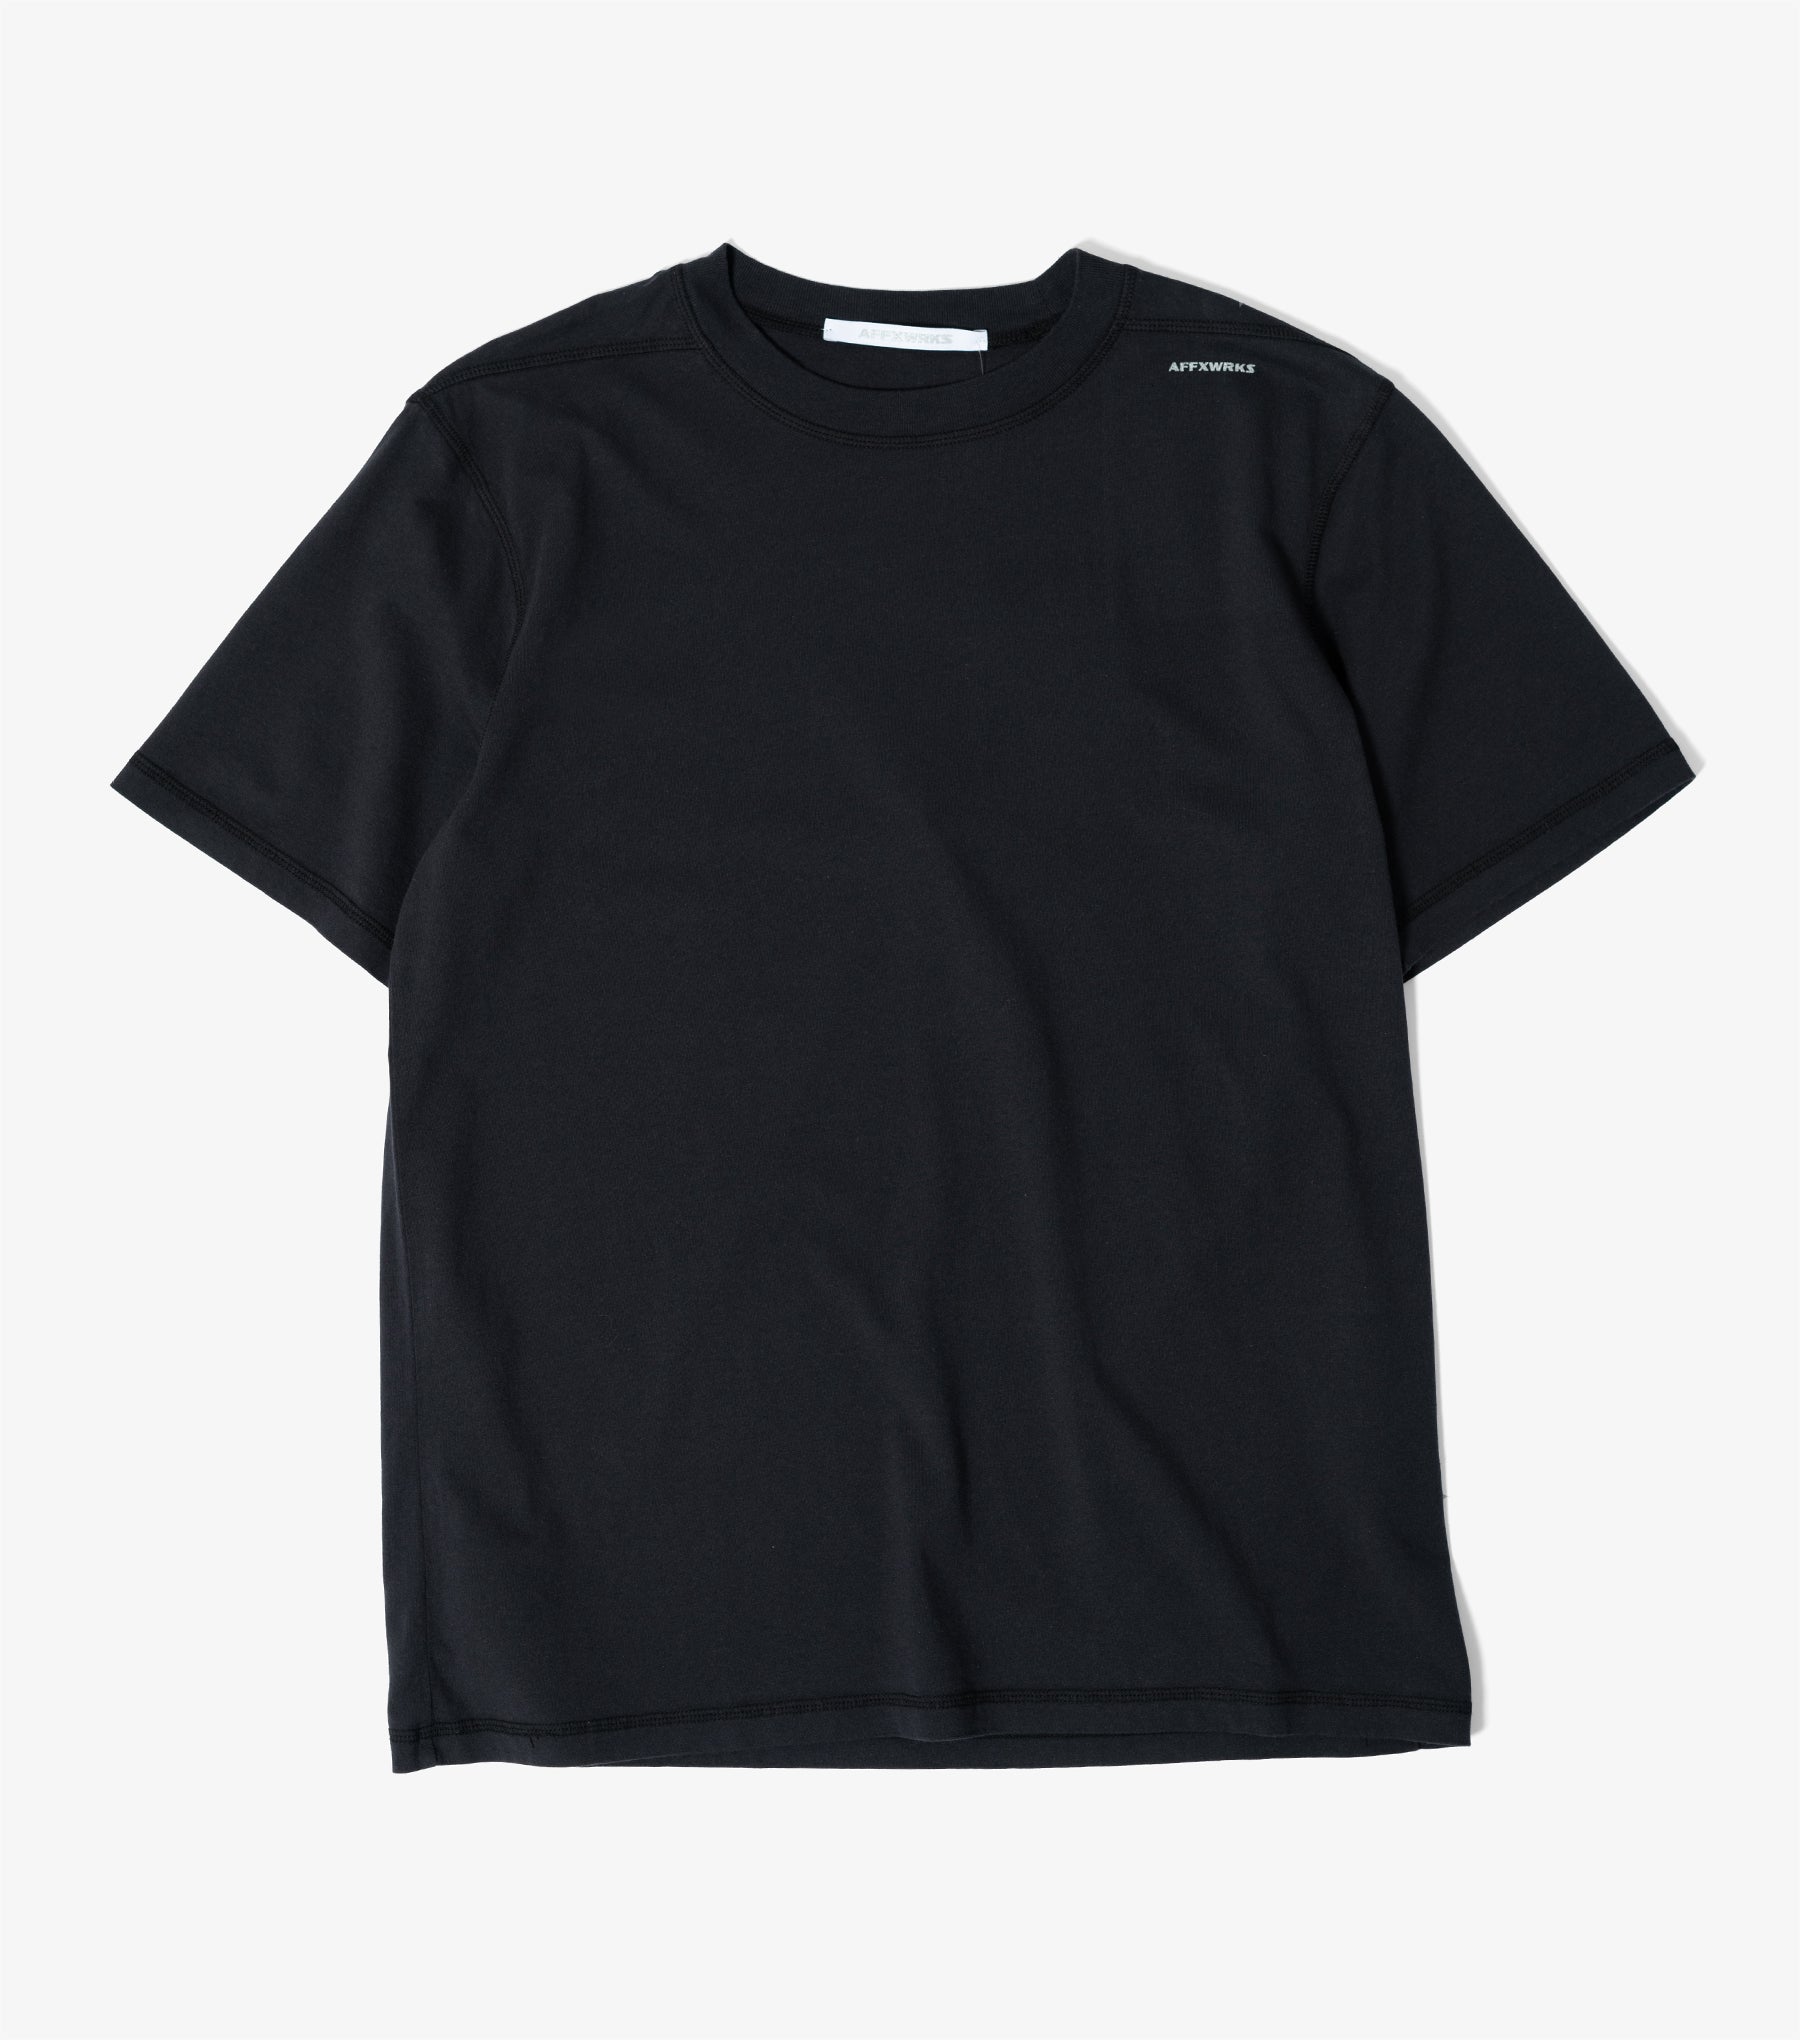 WRKS T-shirt (Black)